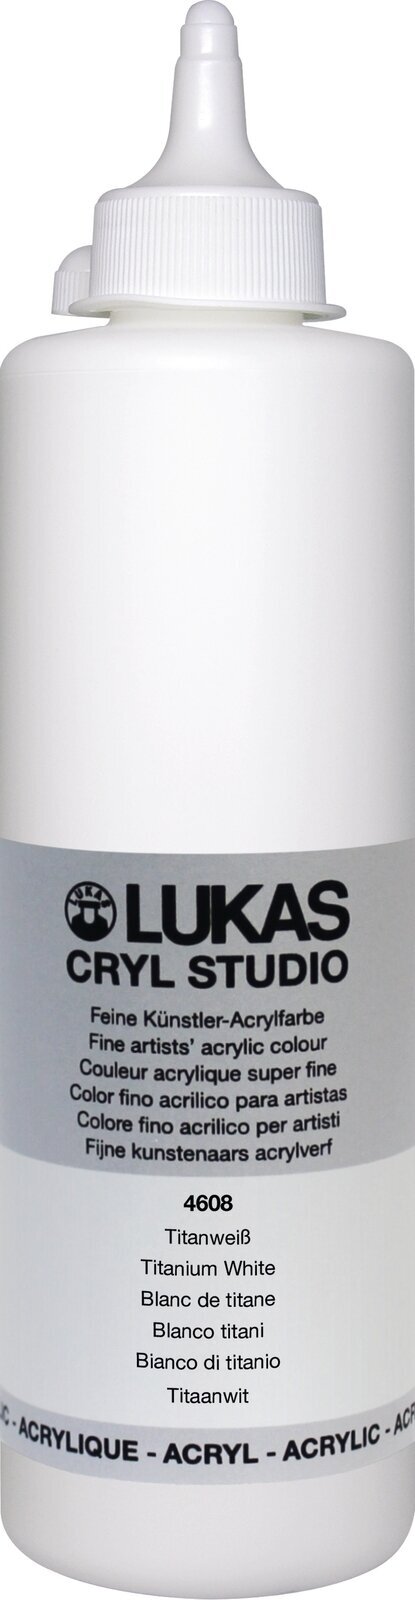 Acrylic Paint Lukas Cryl Studio Plastic Bottle Acrylic Paint Titanium White 500 ml 1 pc